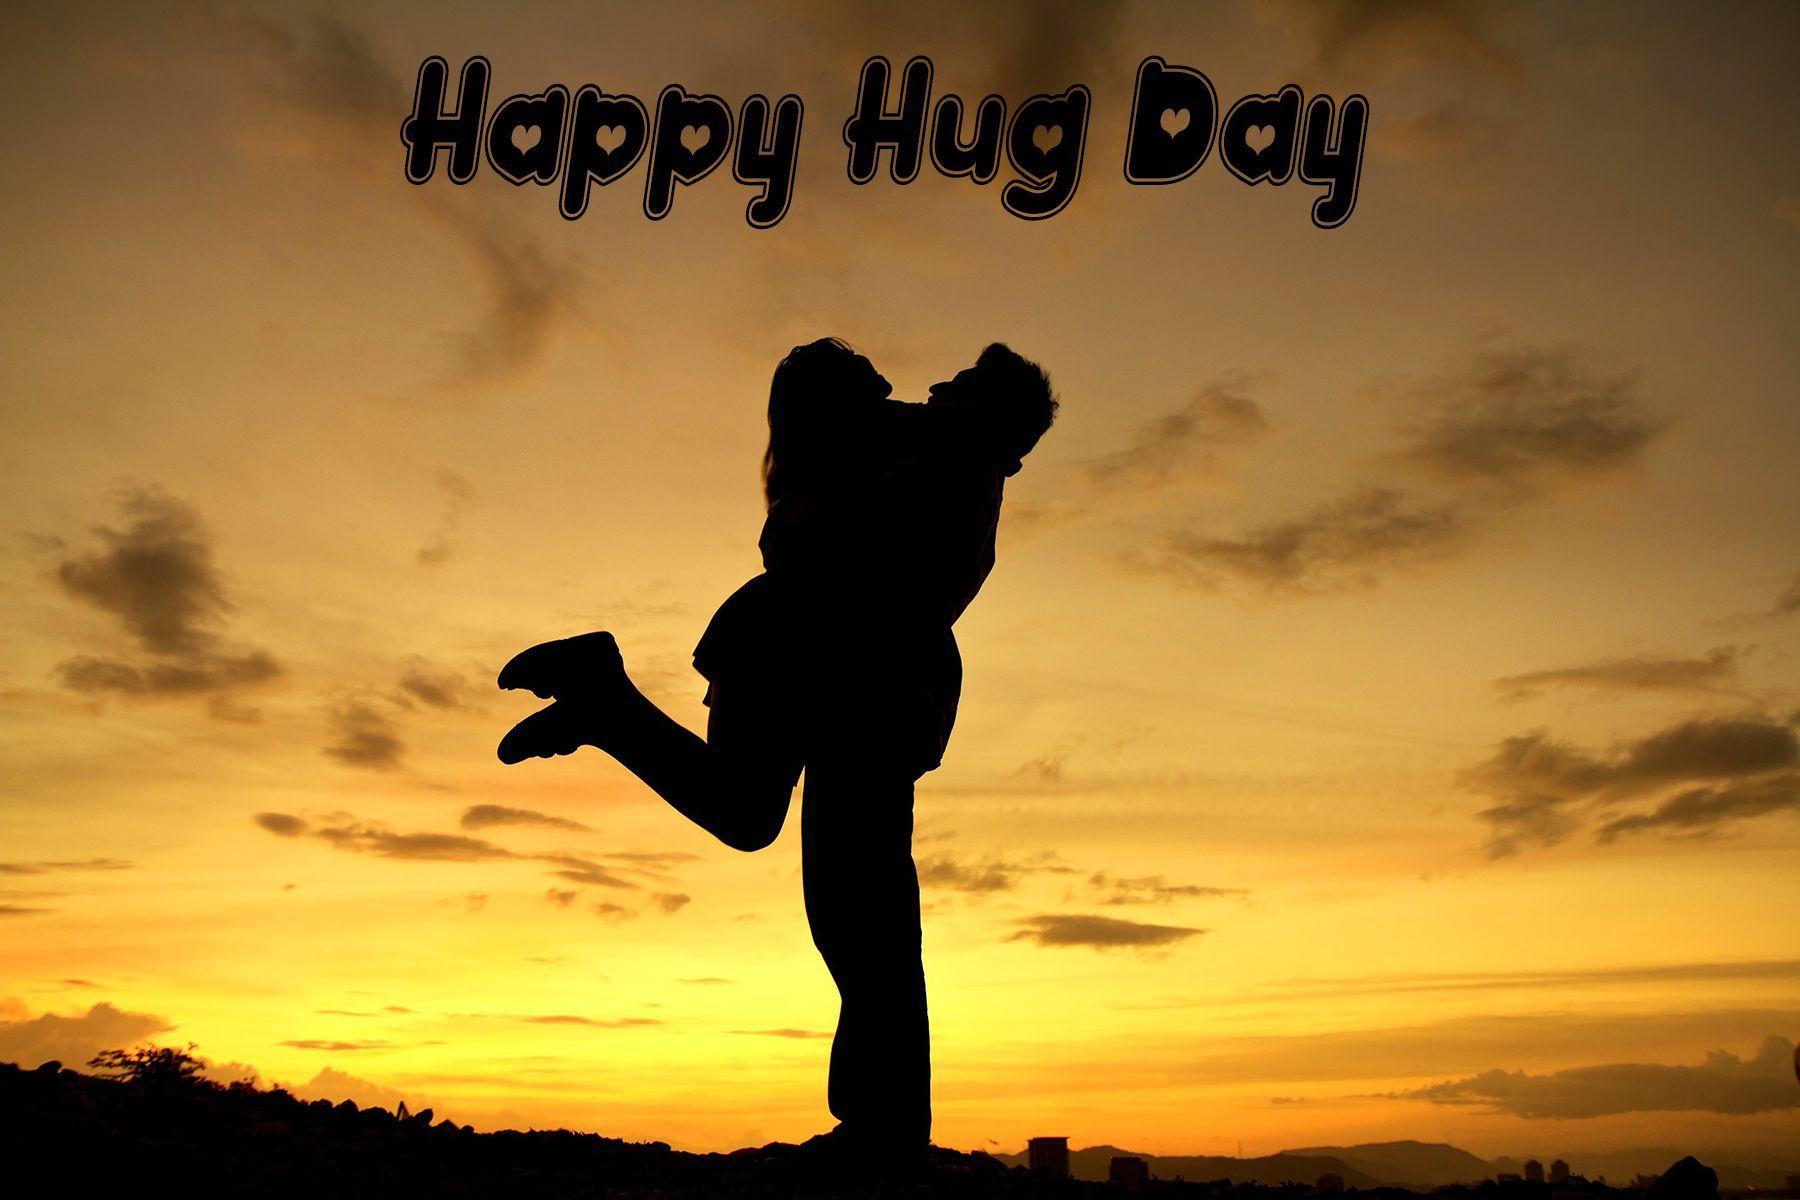 Advance Happy Hug Day Whatsapp Status Dp Wishes Wallpaper Image 2016